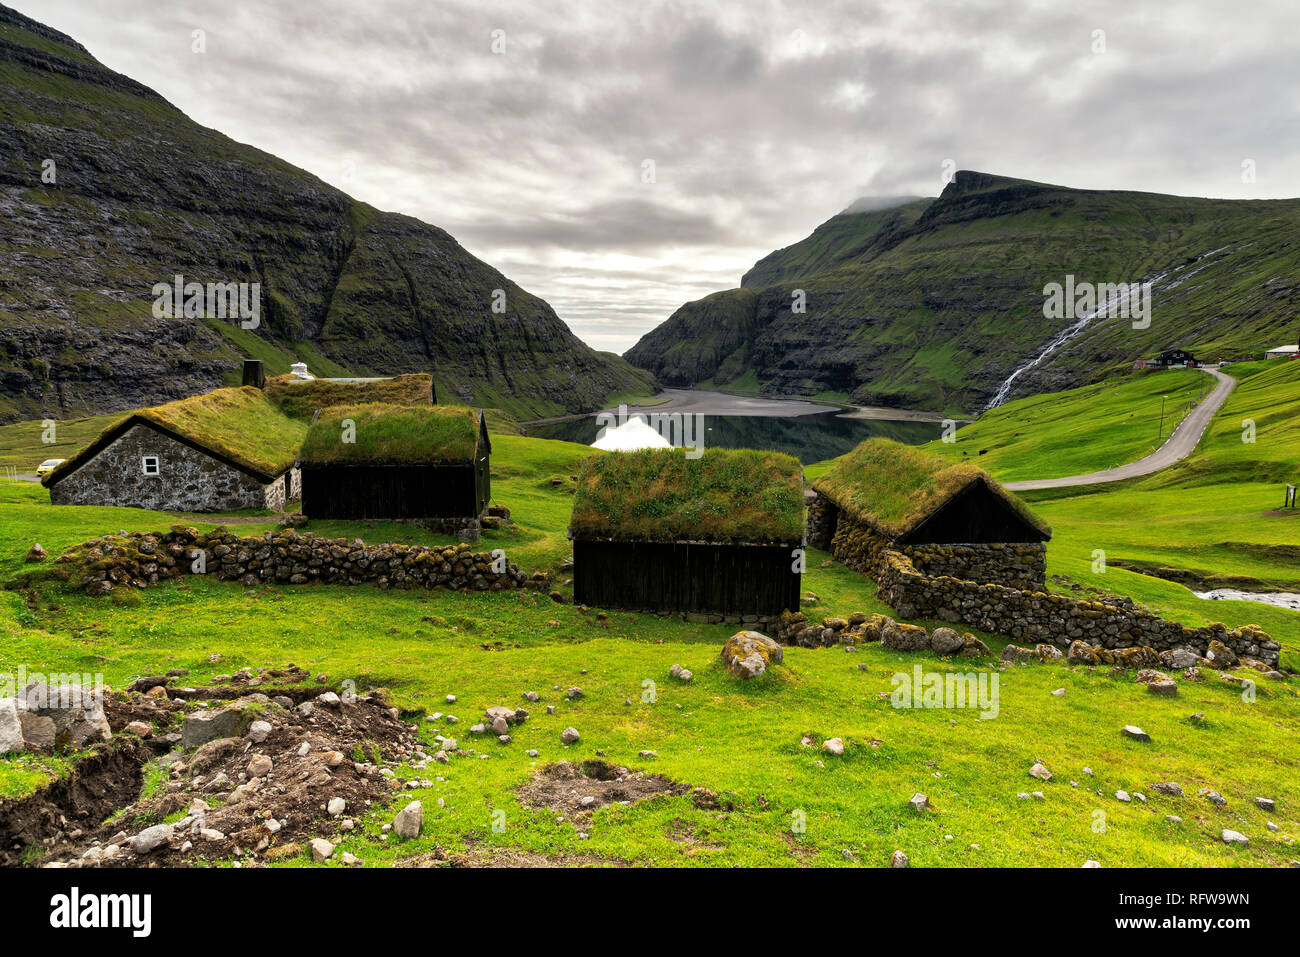 Traditional houses with grass roof, Saksun, Streymoy island, Faroe Islands, Denmark, Europe Stock Photo